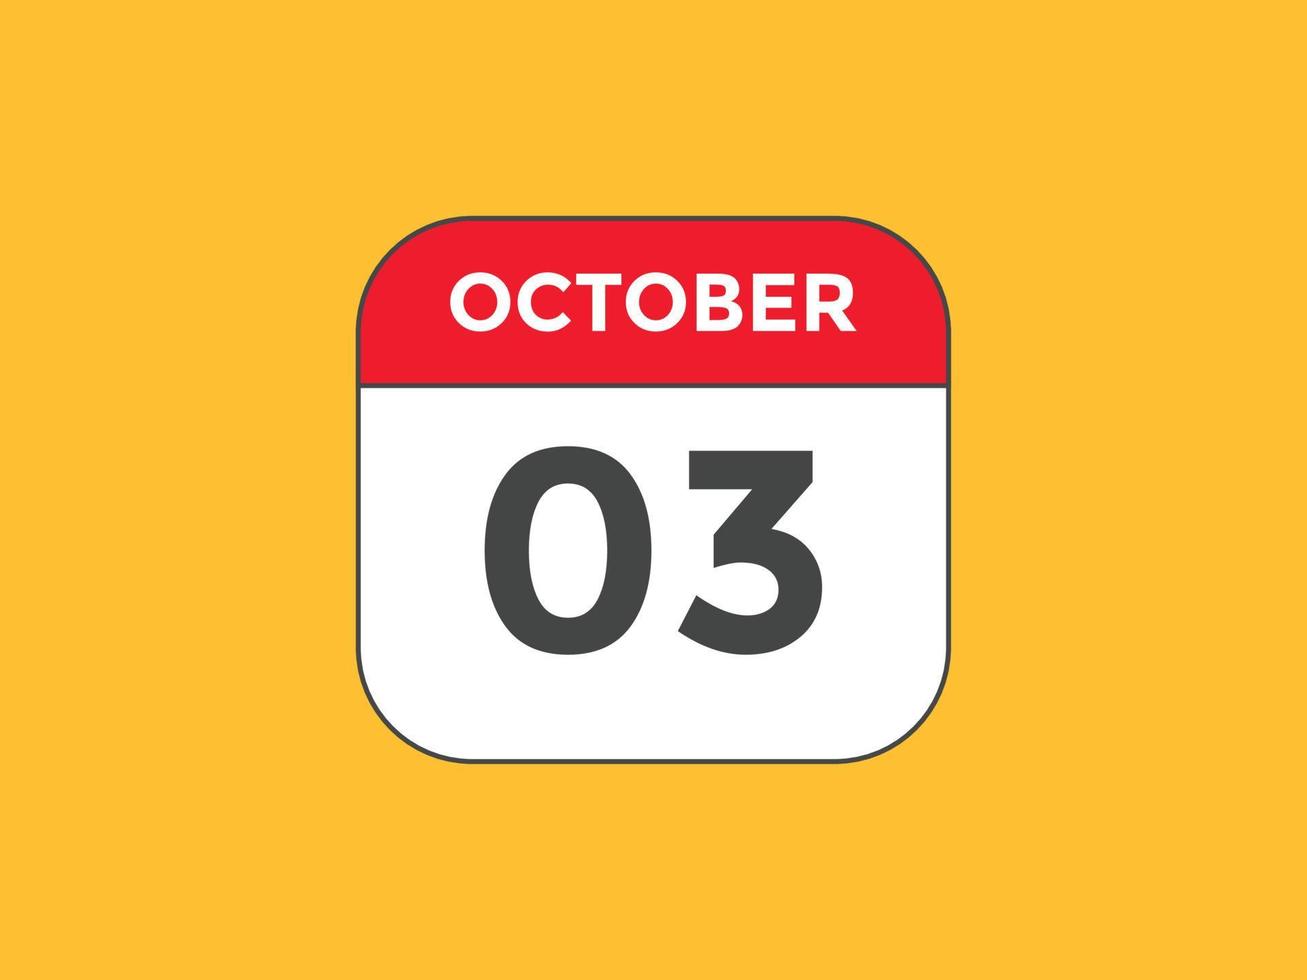 oktober 3 kalender påminnelse. 3:e oktober dagligen kalender ikon mall. kalender 3:e oktober ikon design mall. vektor illustration